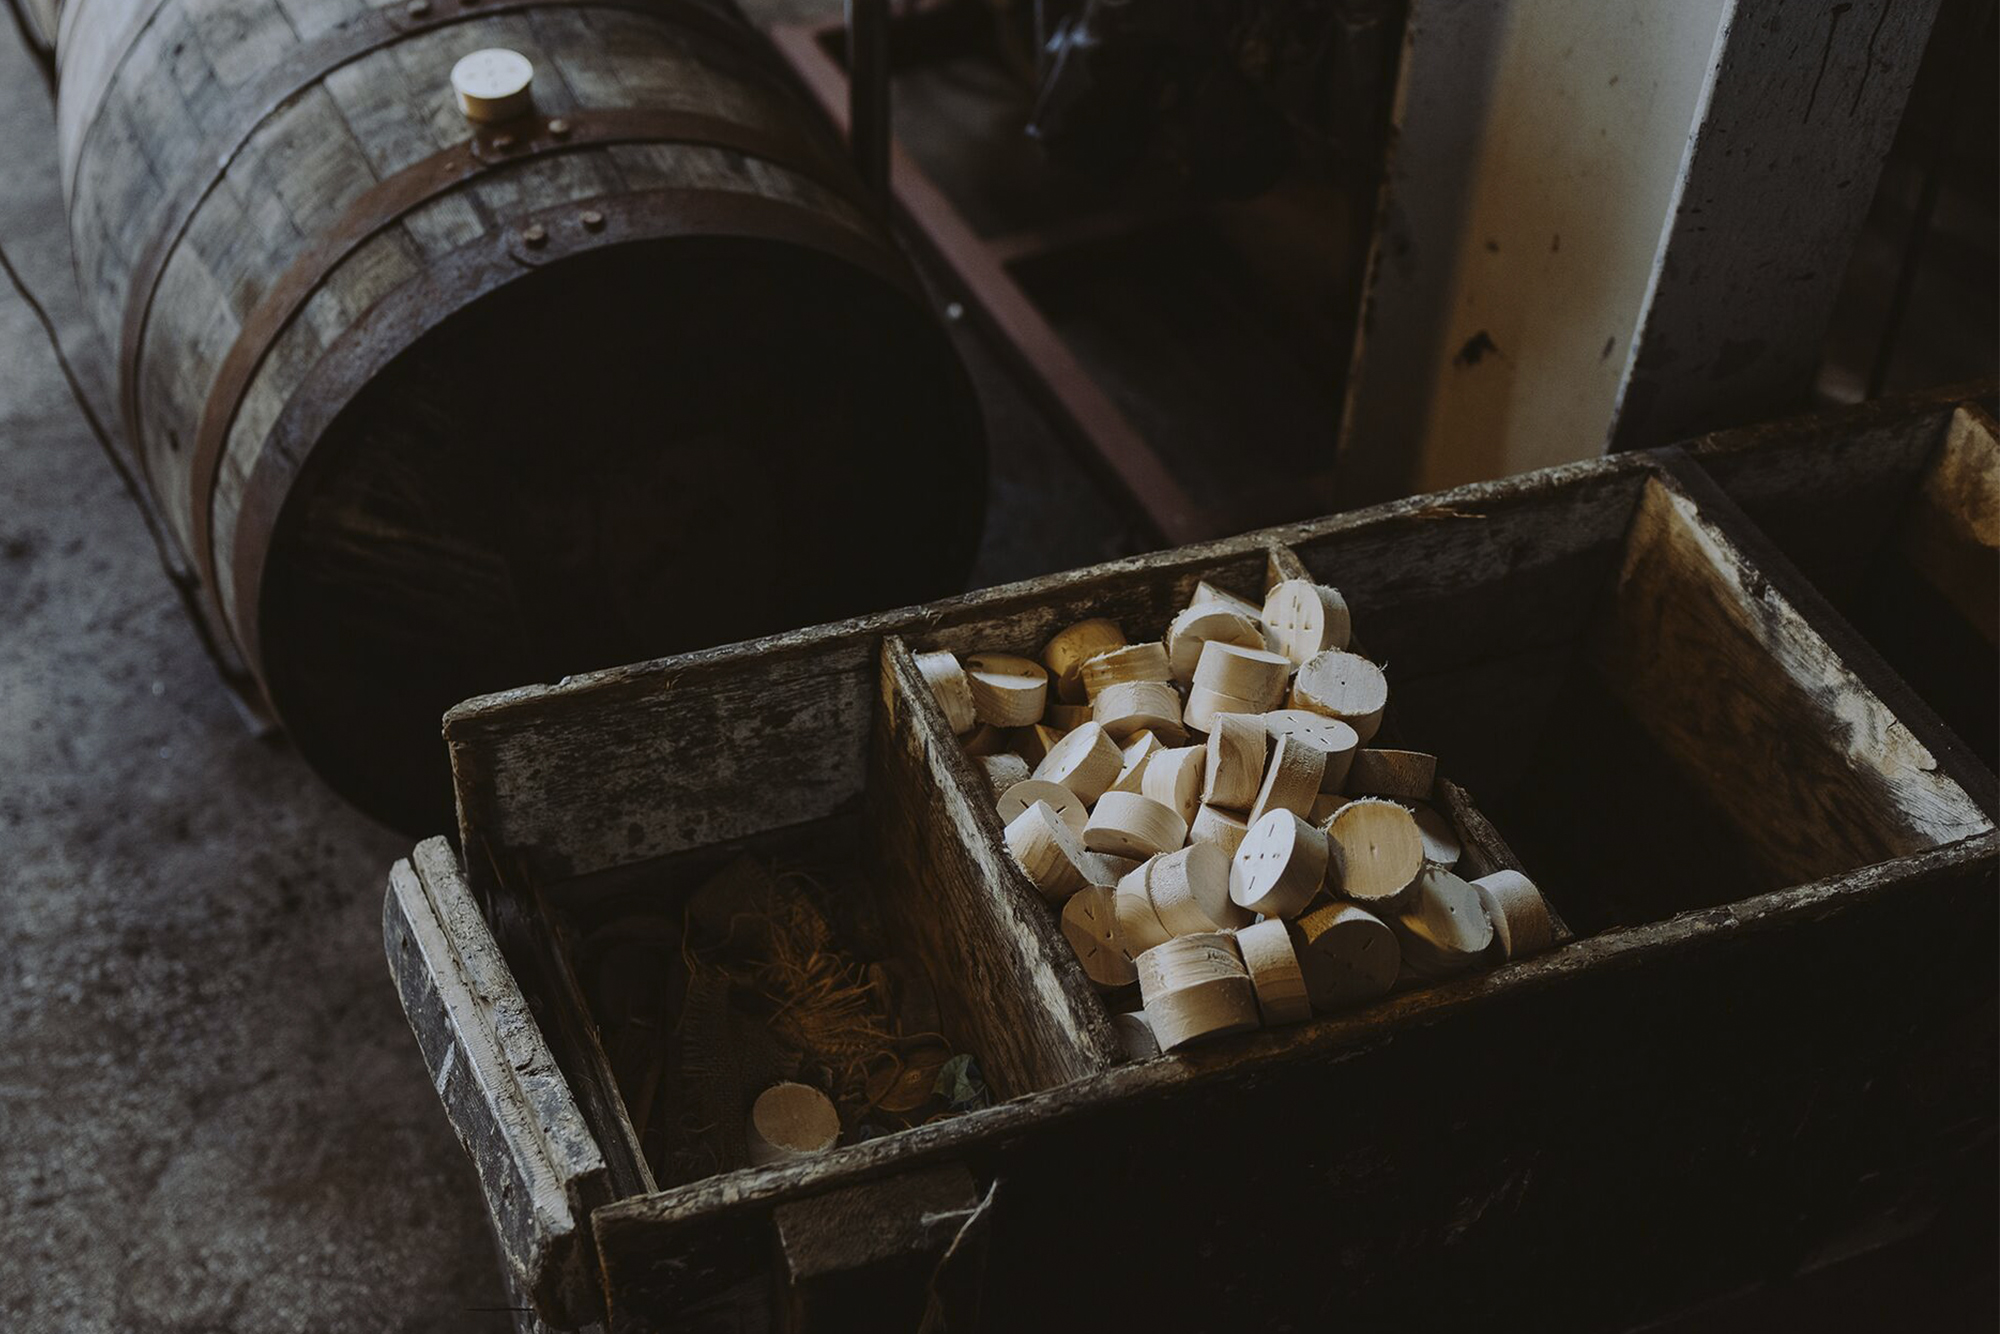 Jura Distillery, Scotland, Whiskey